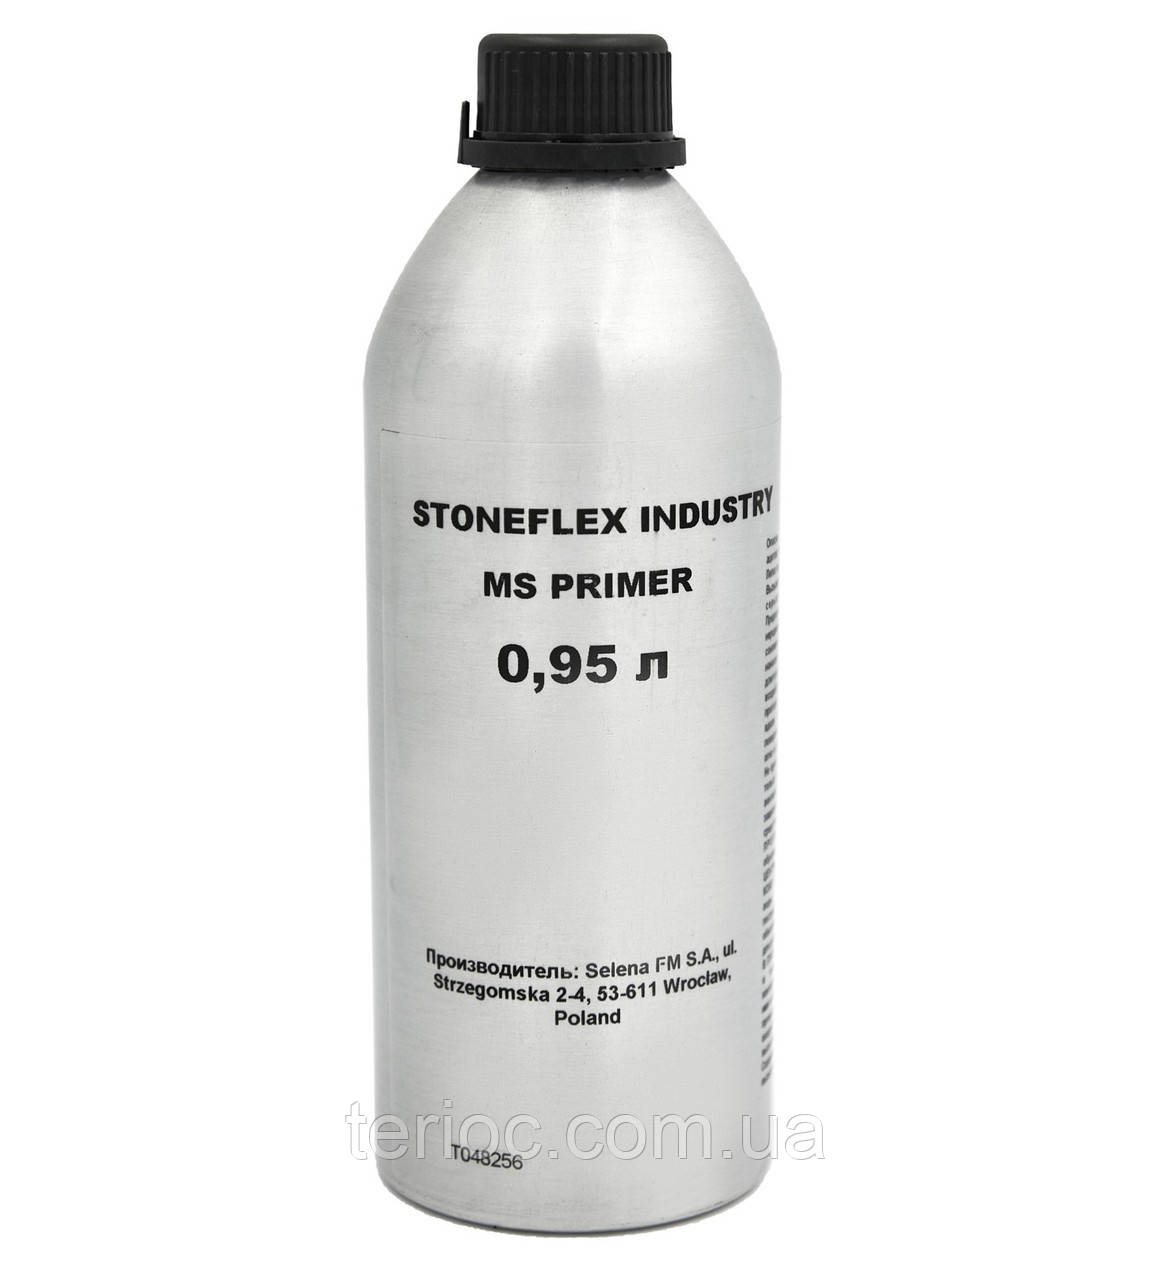 Stoneflex MS Primer - Поліуретановий праймер (грунт), 0,95 л